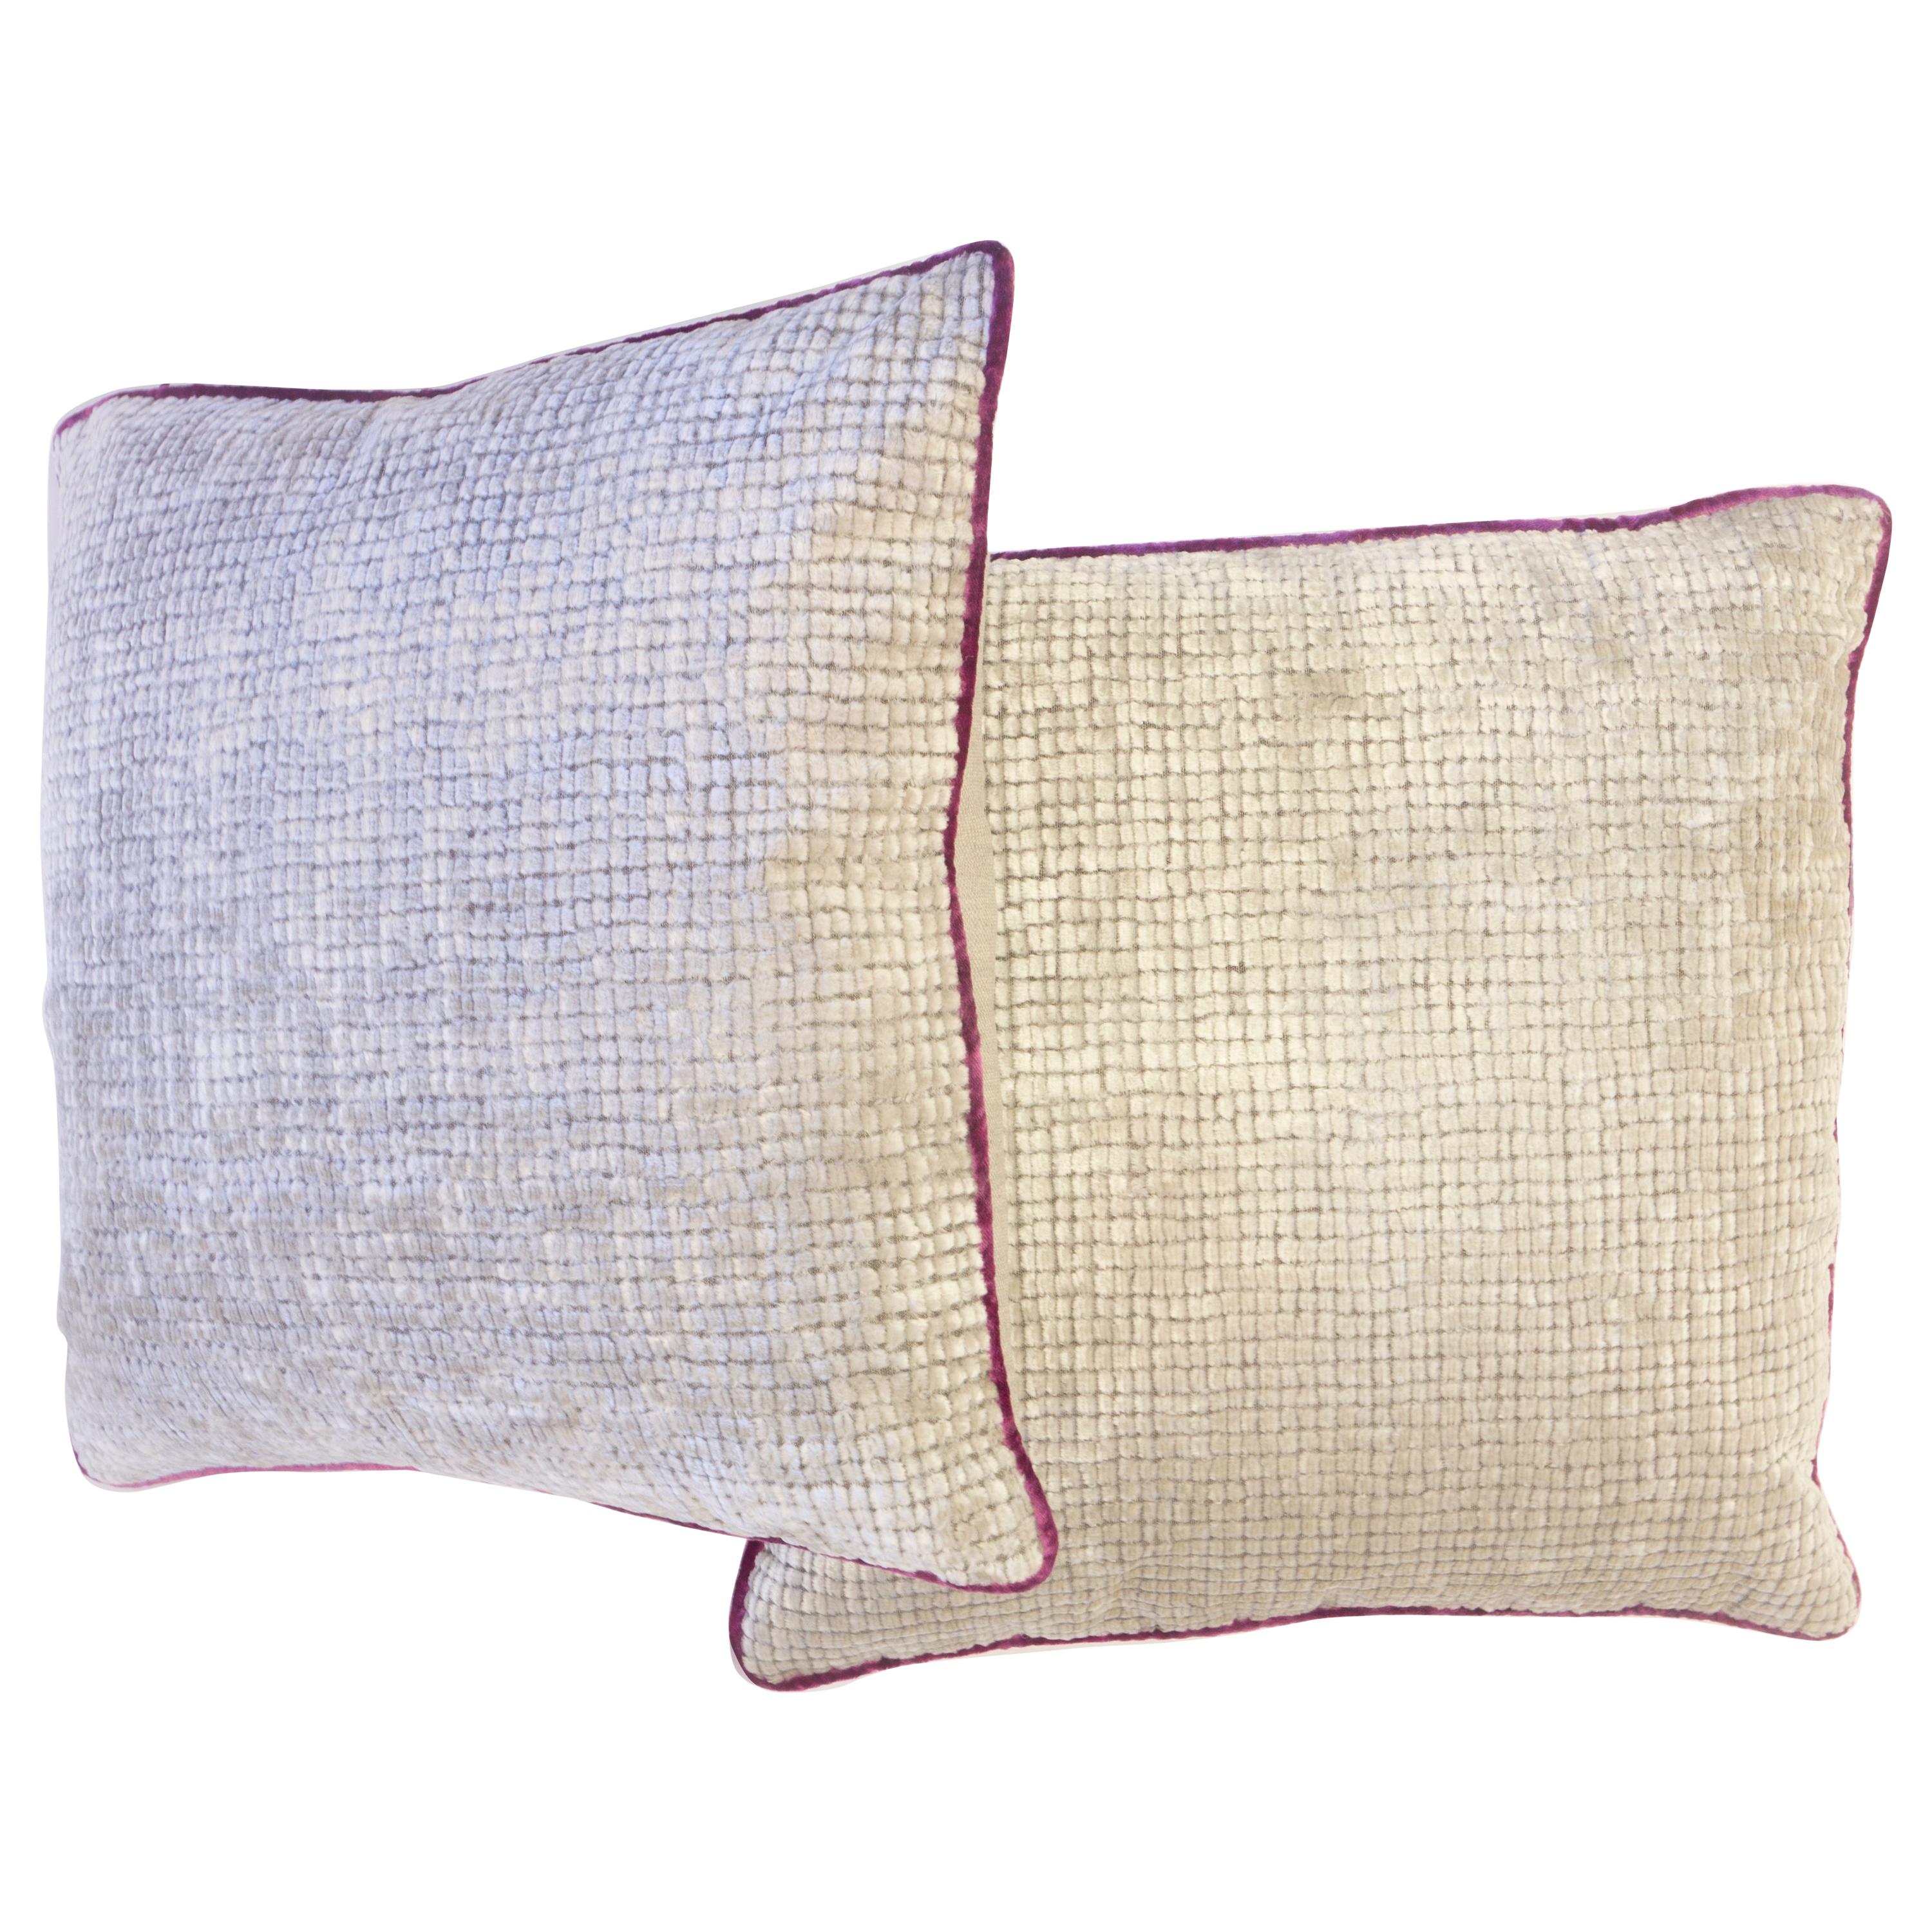 Soft Velvet Throw Pillows with Fuchsia Piping